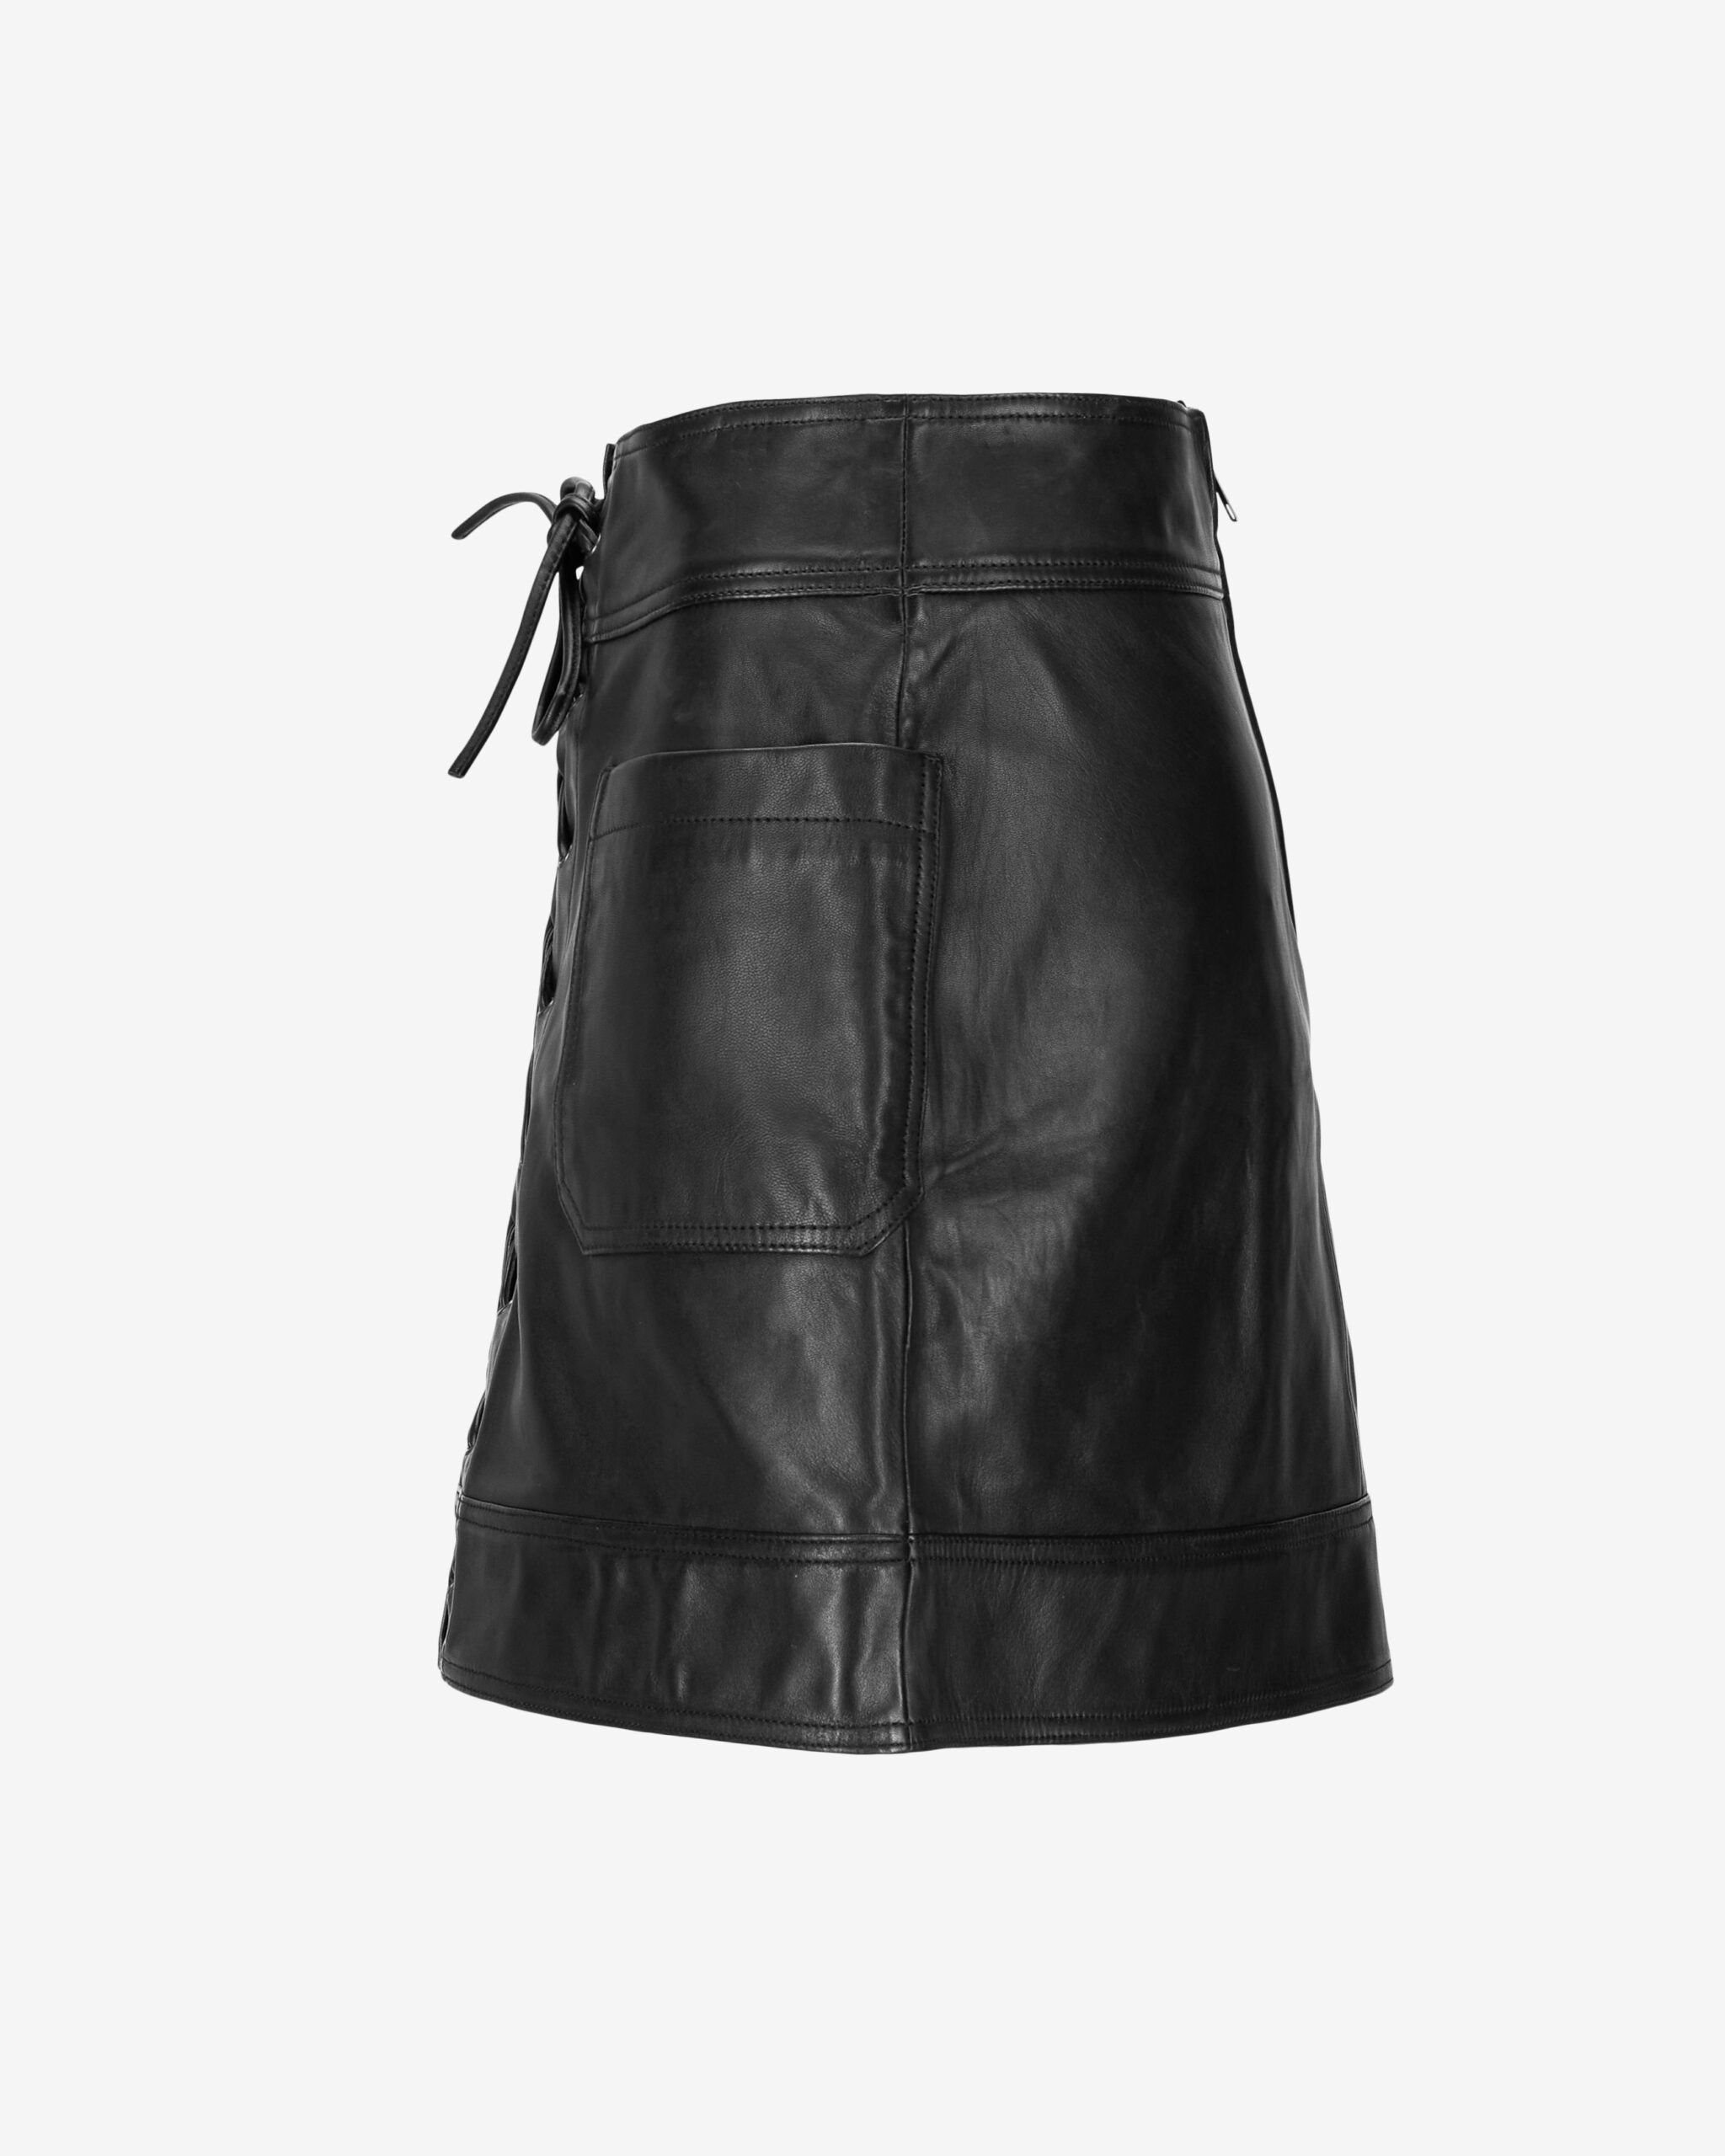 Raya Skirt HT - Black